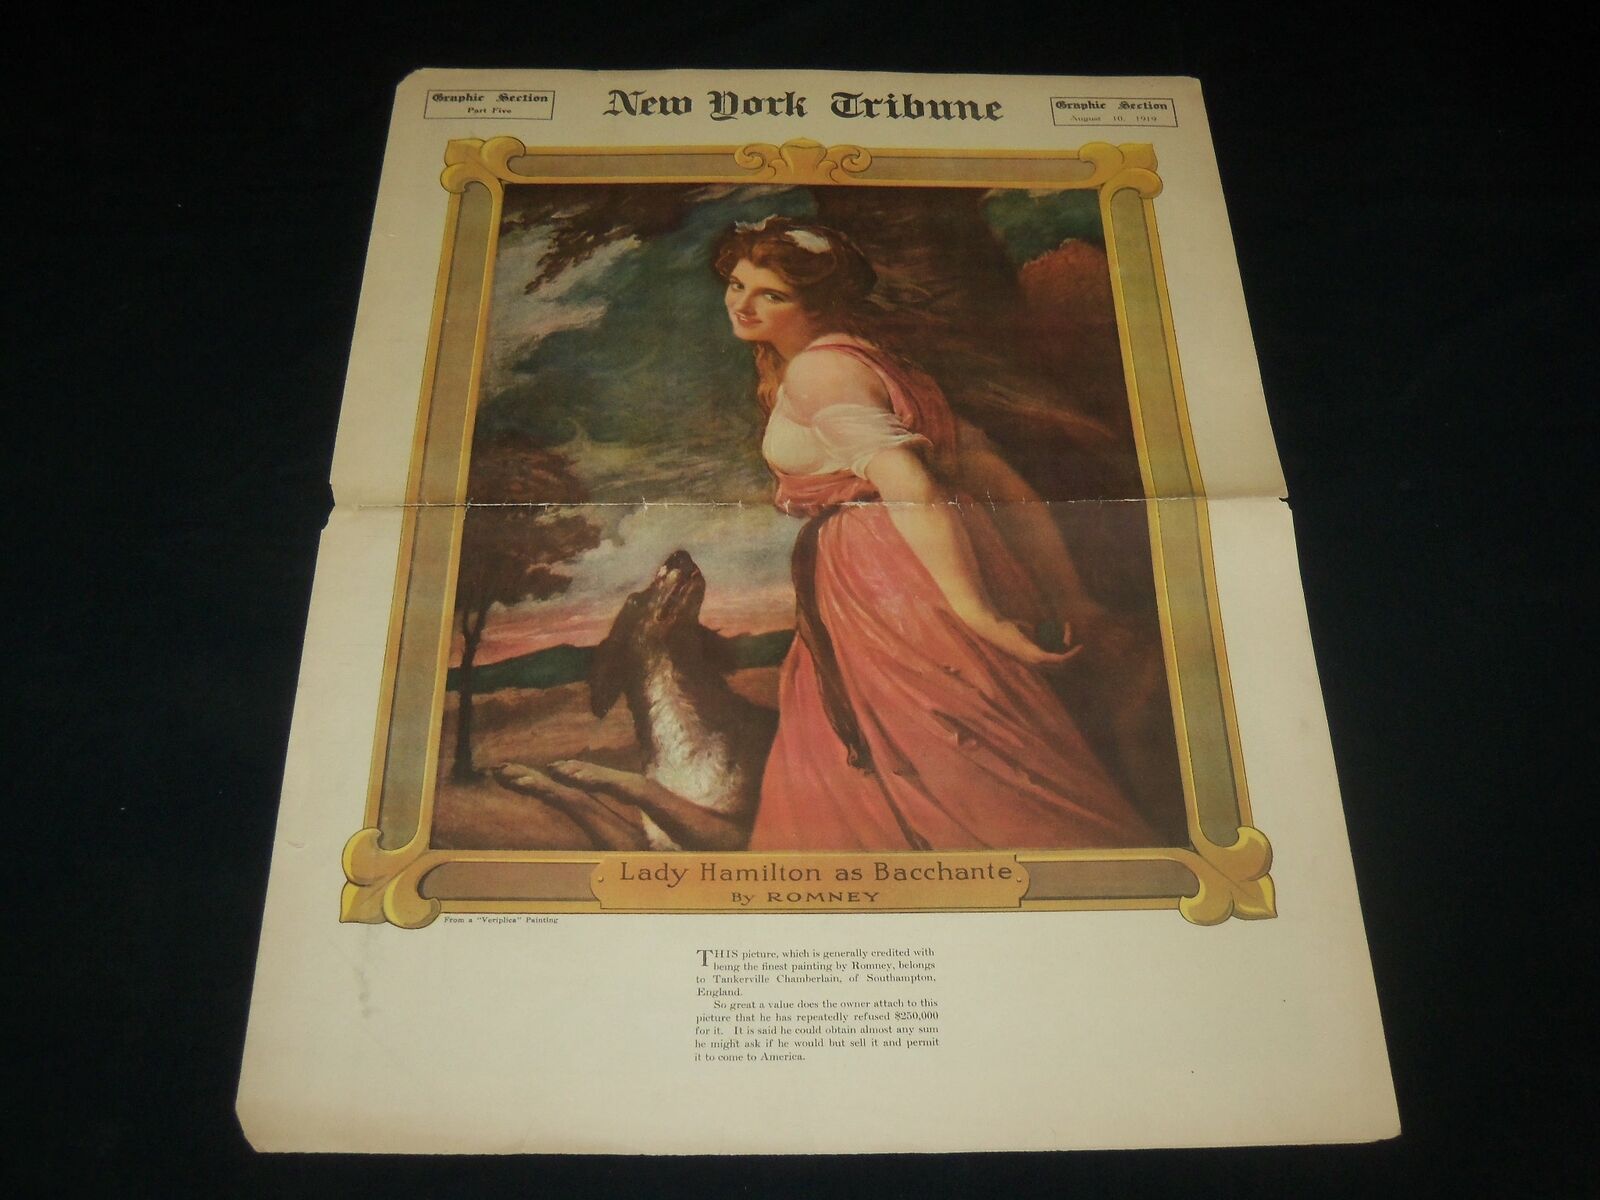 1919 AUG 10 NEW YORK TRIBUNE GRAPHIC SECTION - JACK & JILL - VARGAS - NP 5388